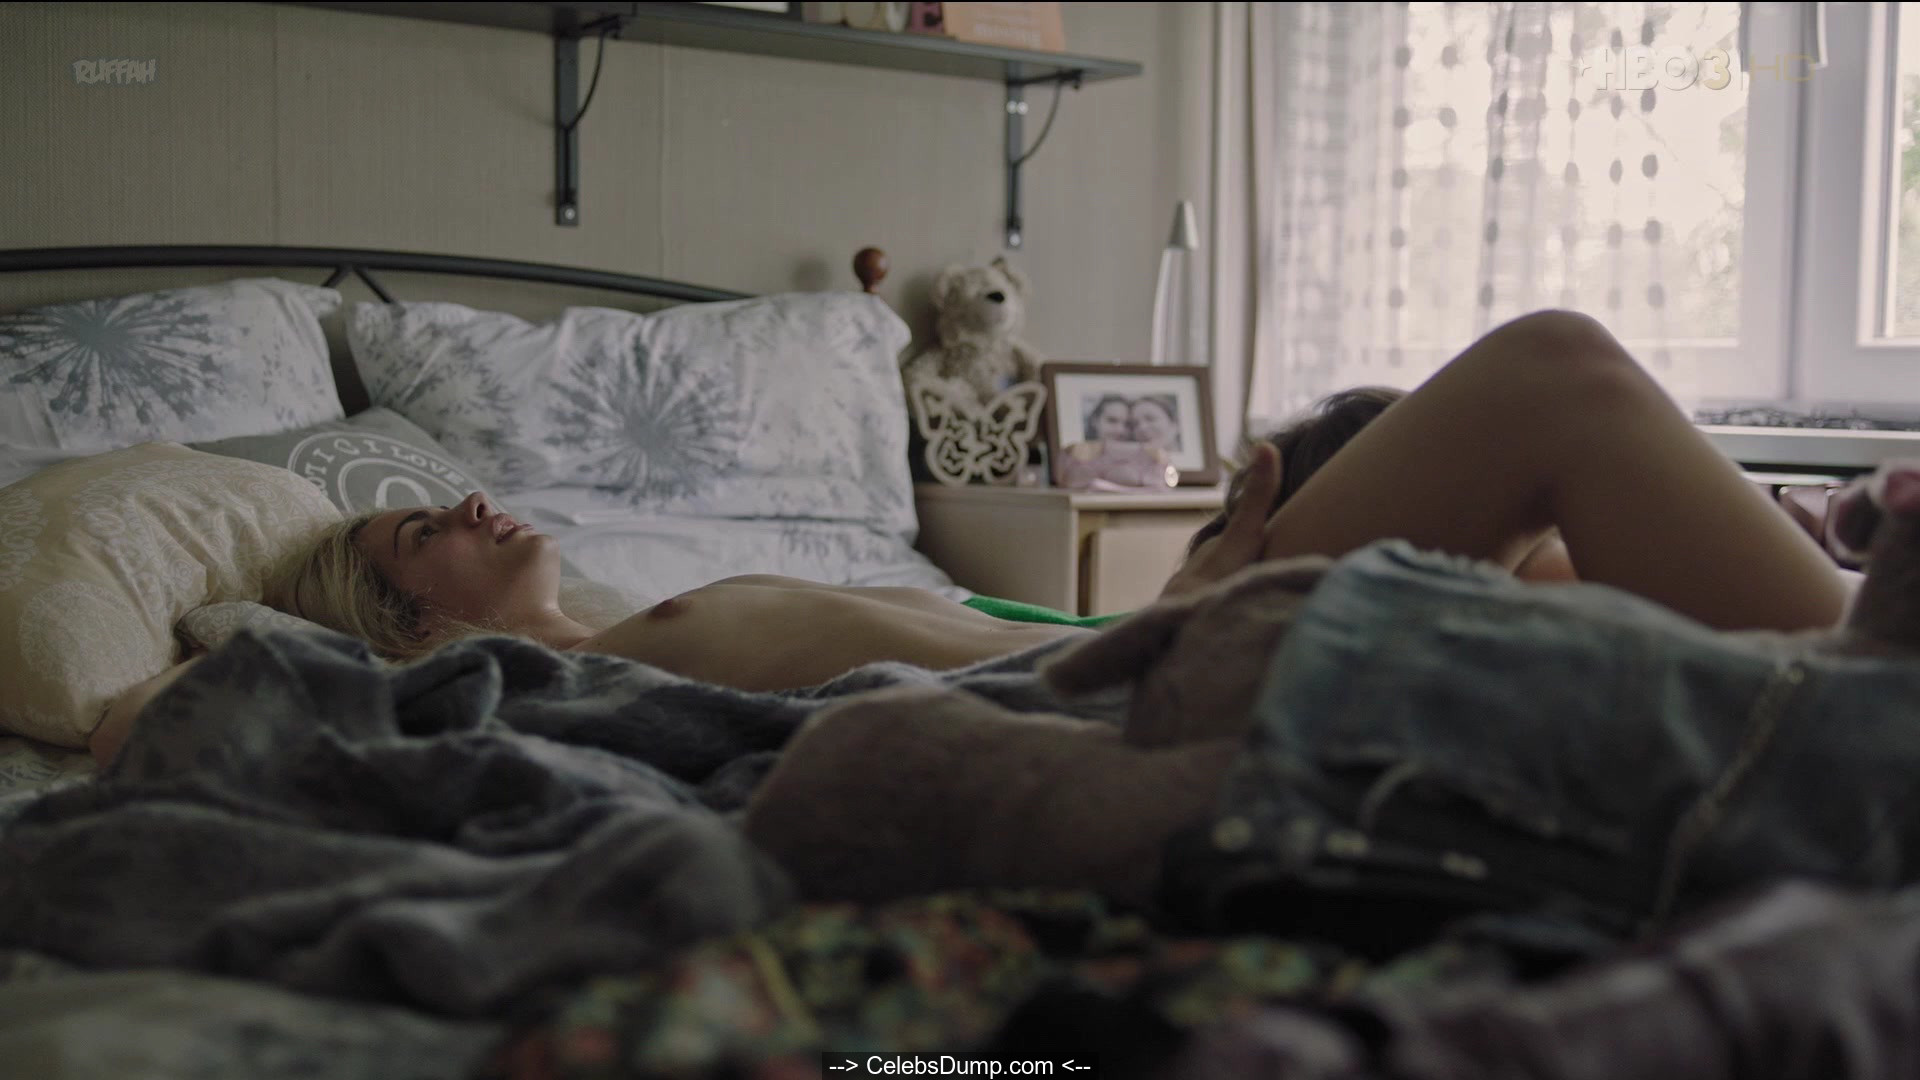 Tara Thaller naked movie scenes.